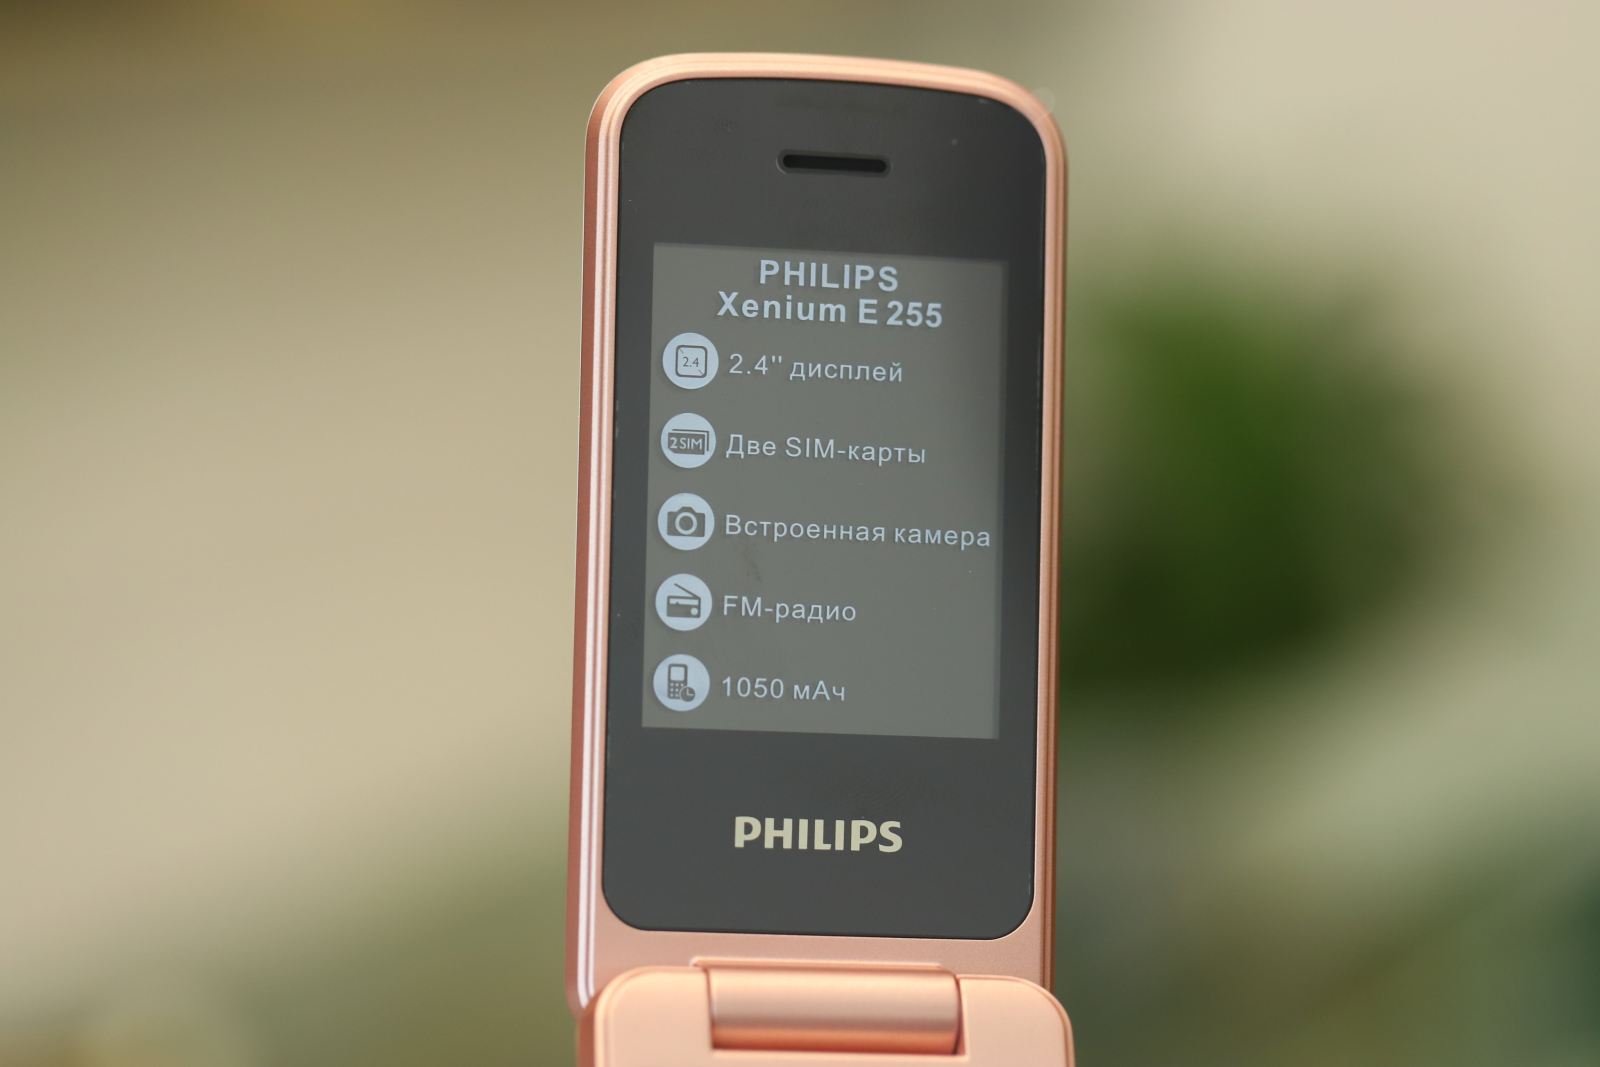 Philips Xenium E255